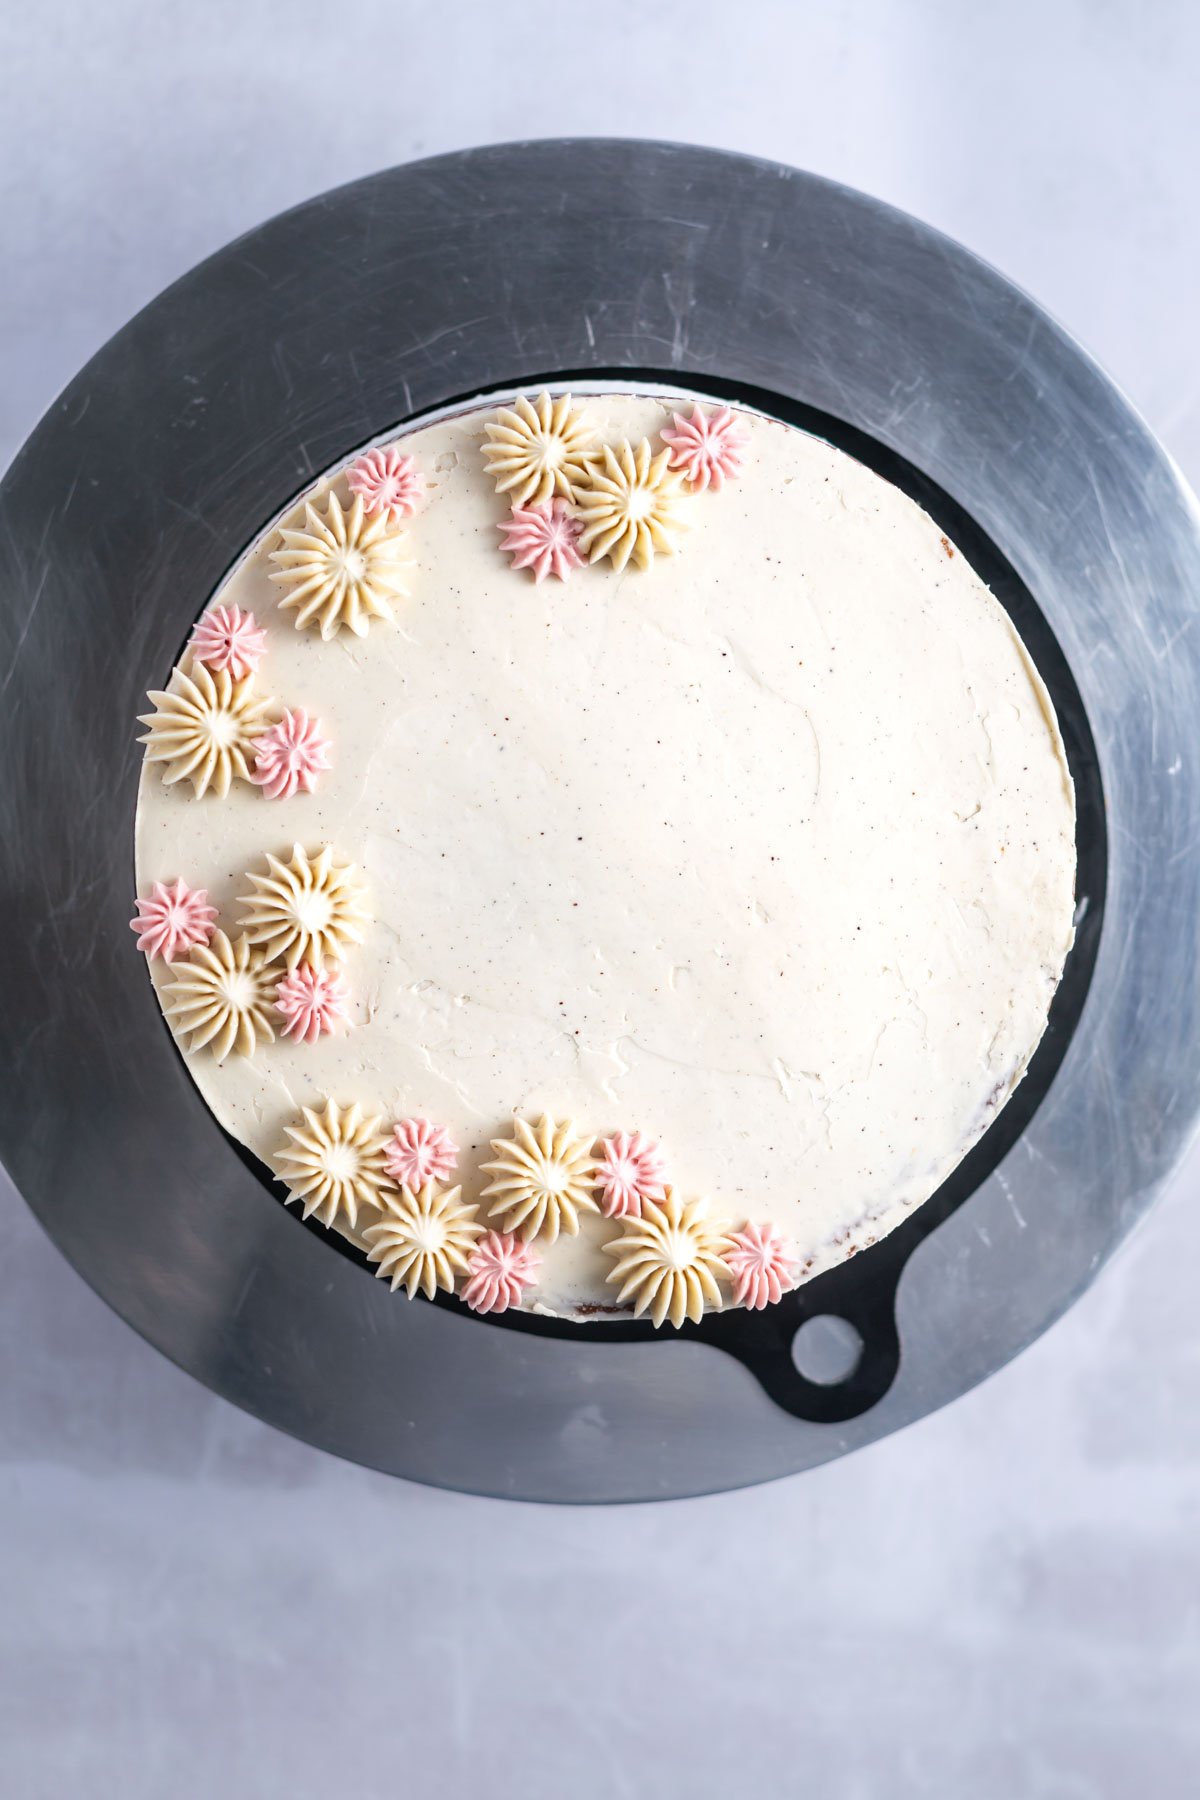 decorated vanilla bean cake top